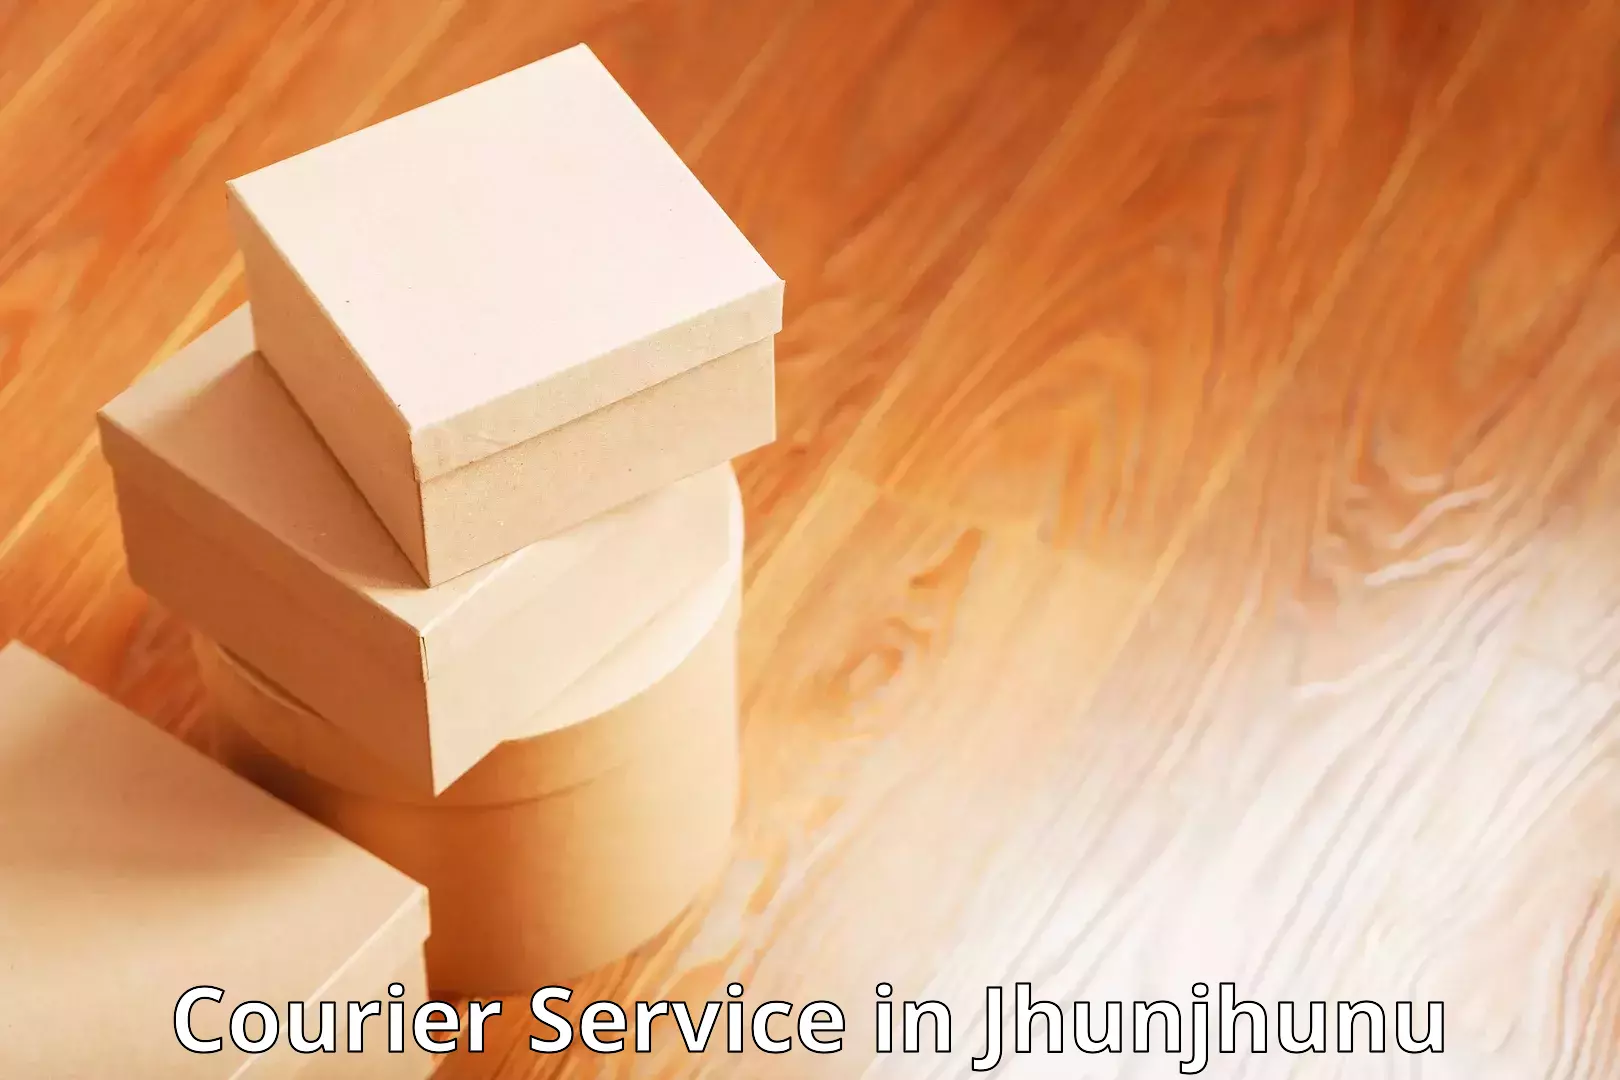 Modern courier technology in Jhunjhunu